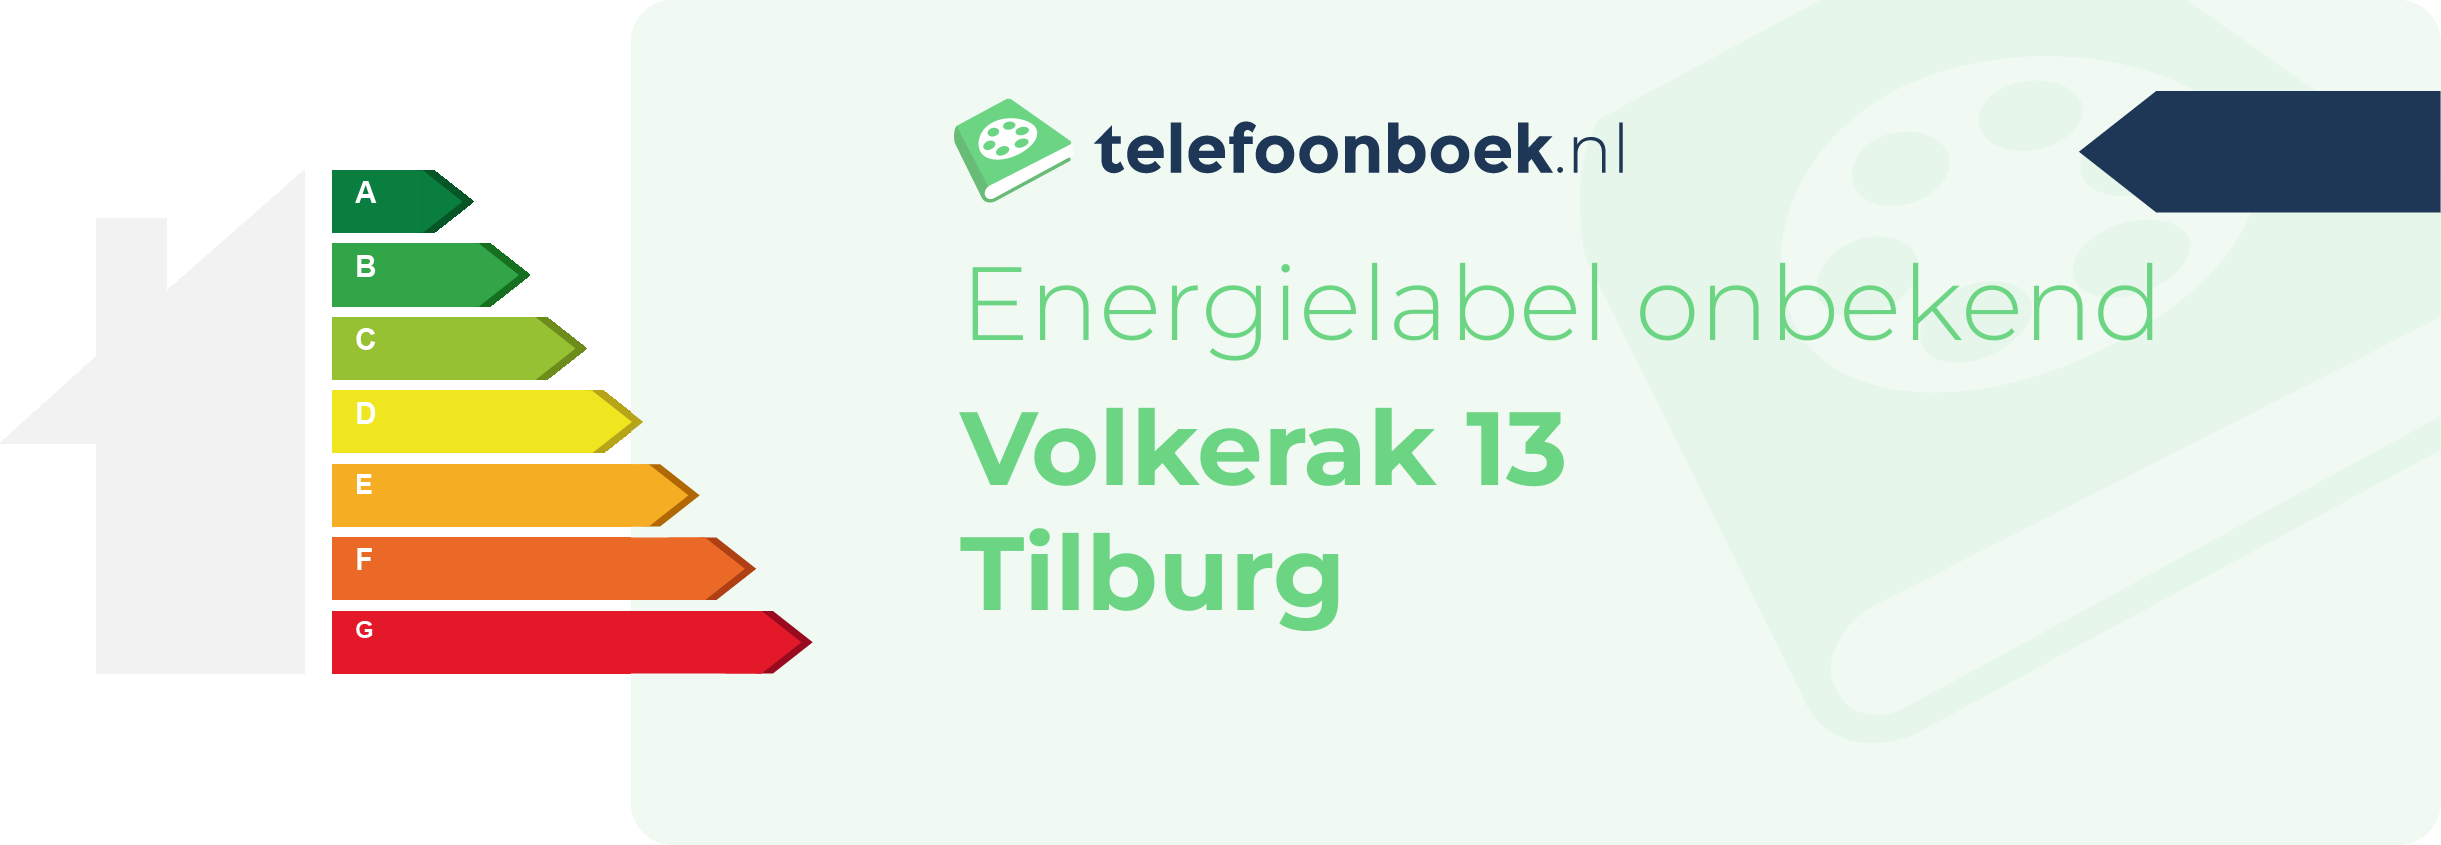 Energielabel Volkerak 13 Tilburg